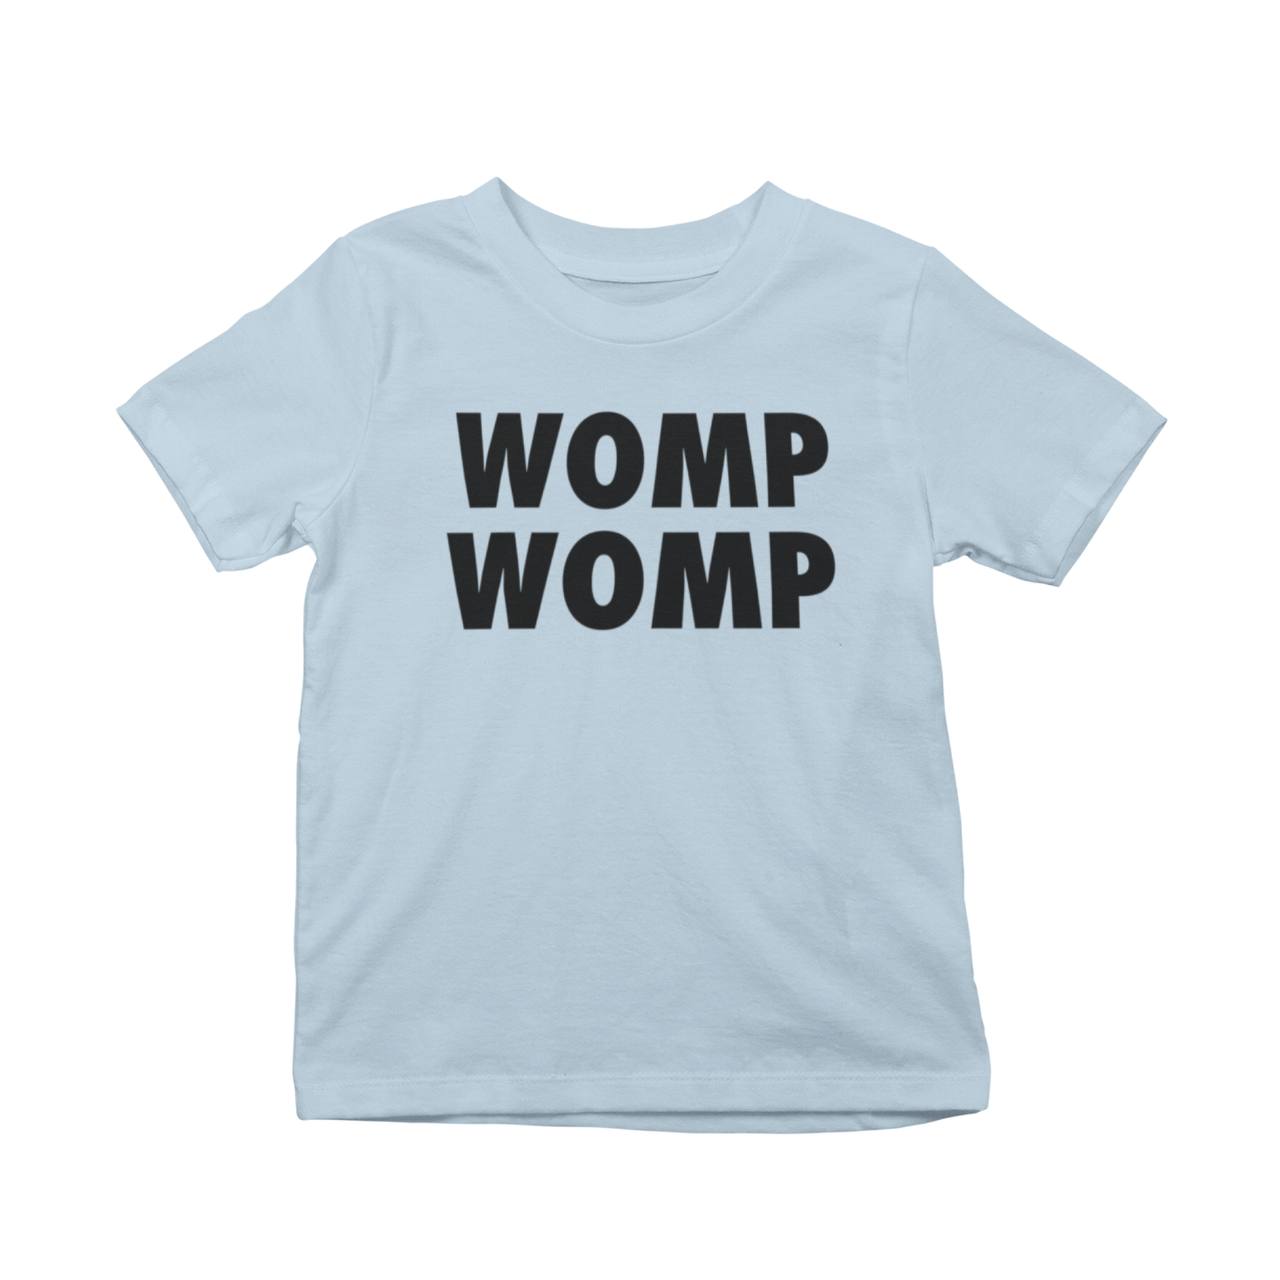 Womp Womp T-Shirt